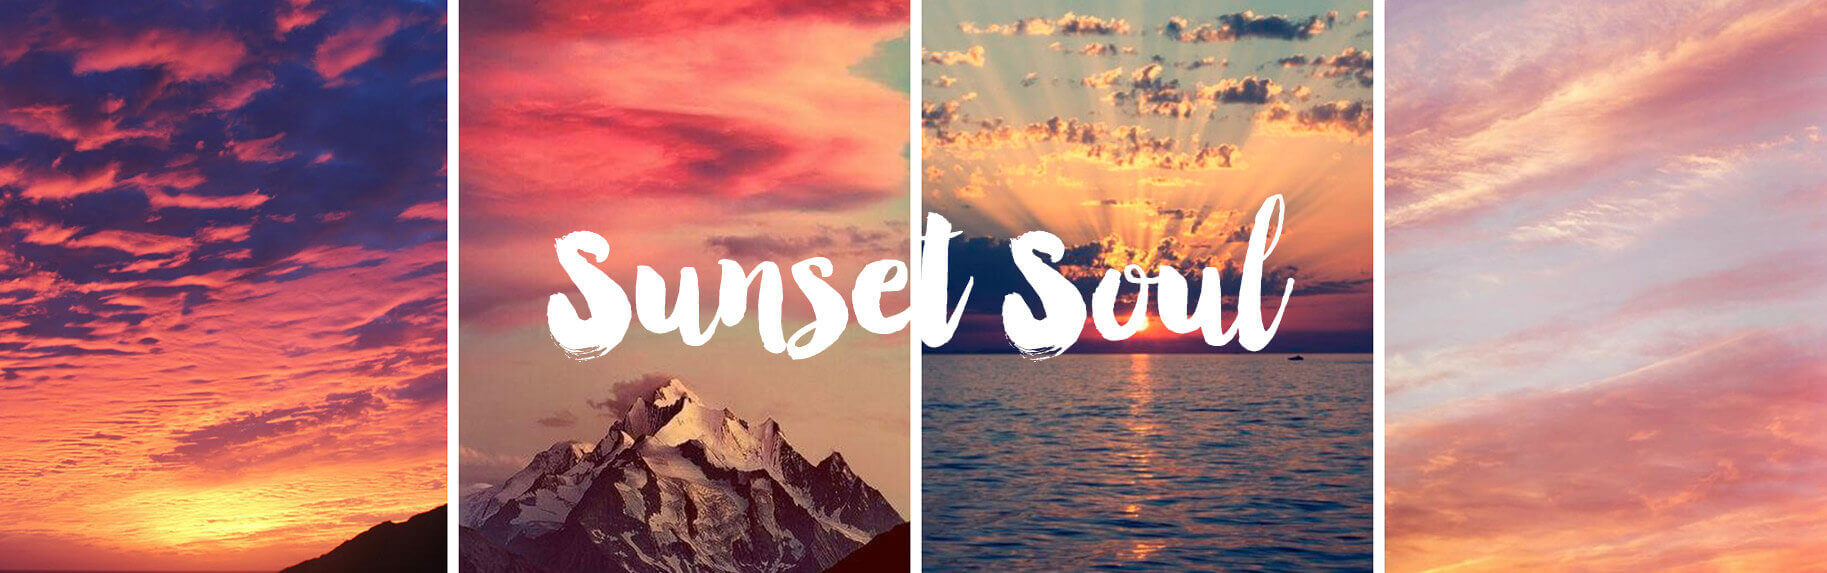 sunset soul